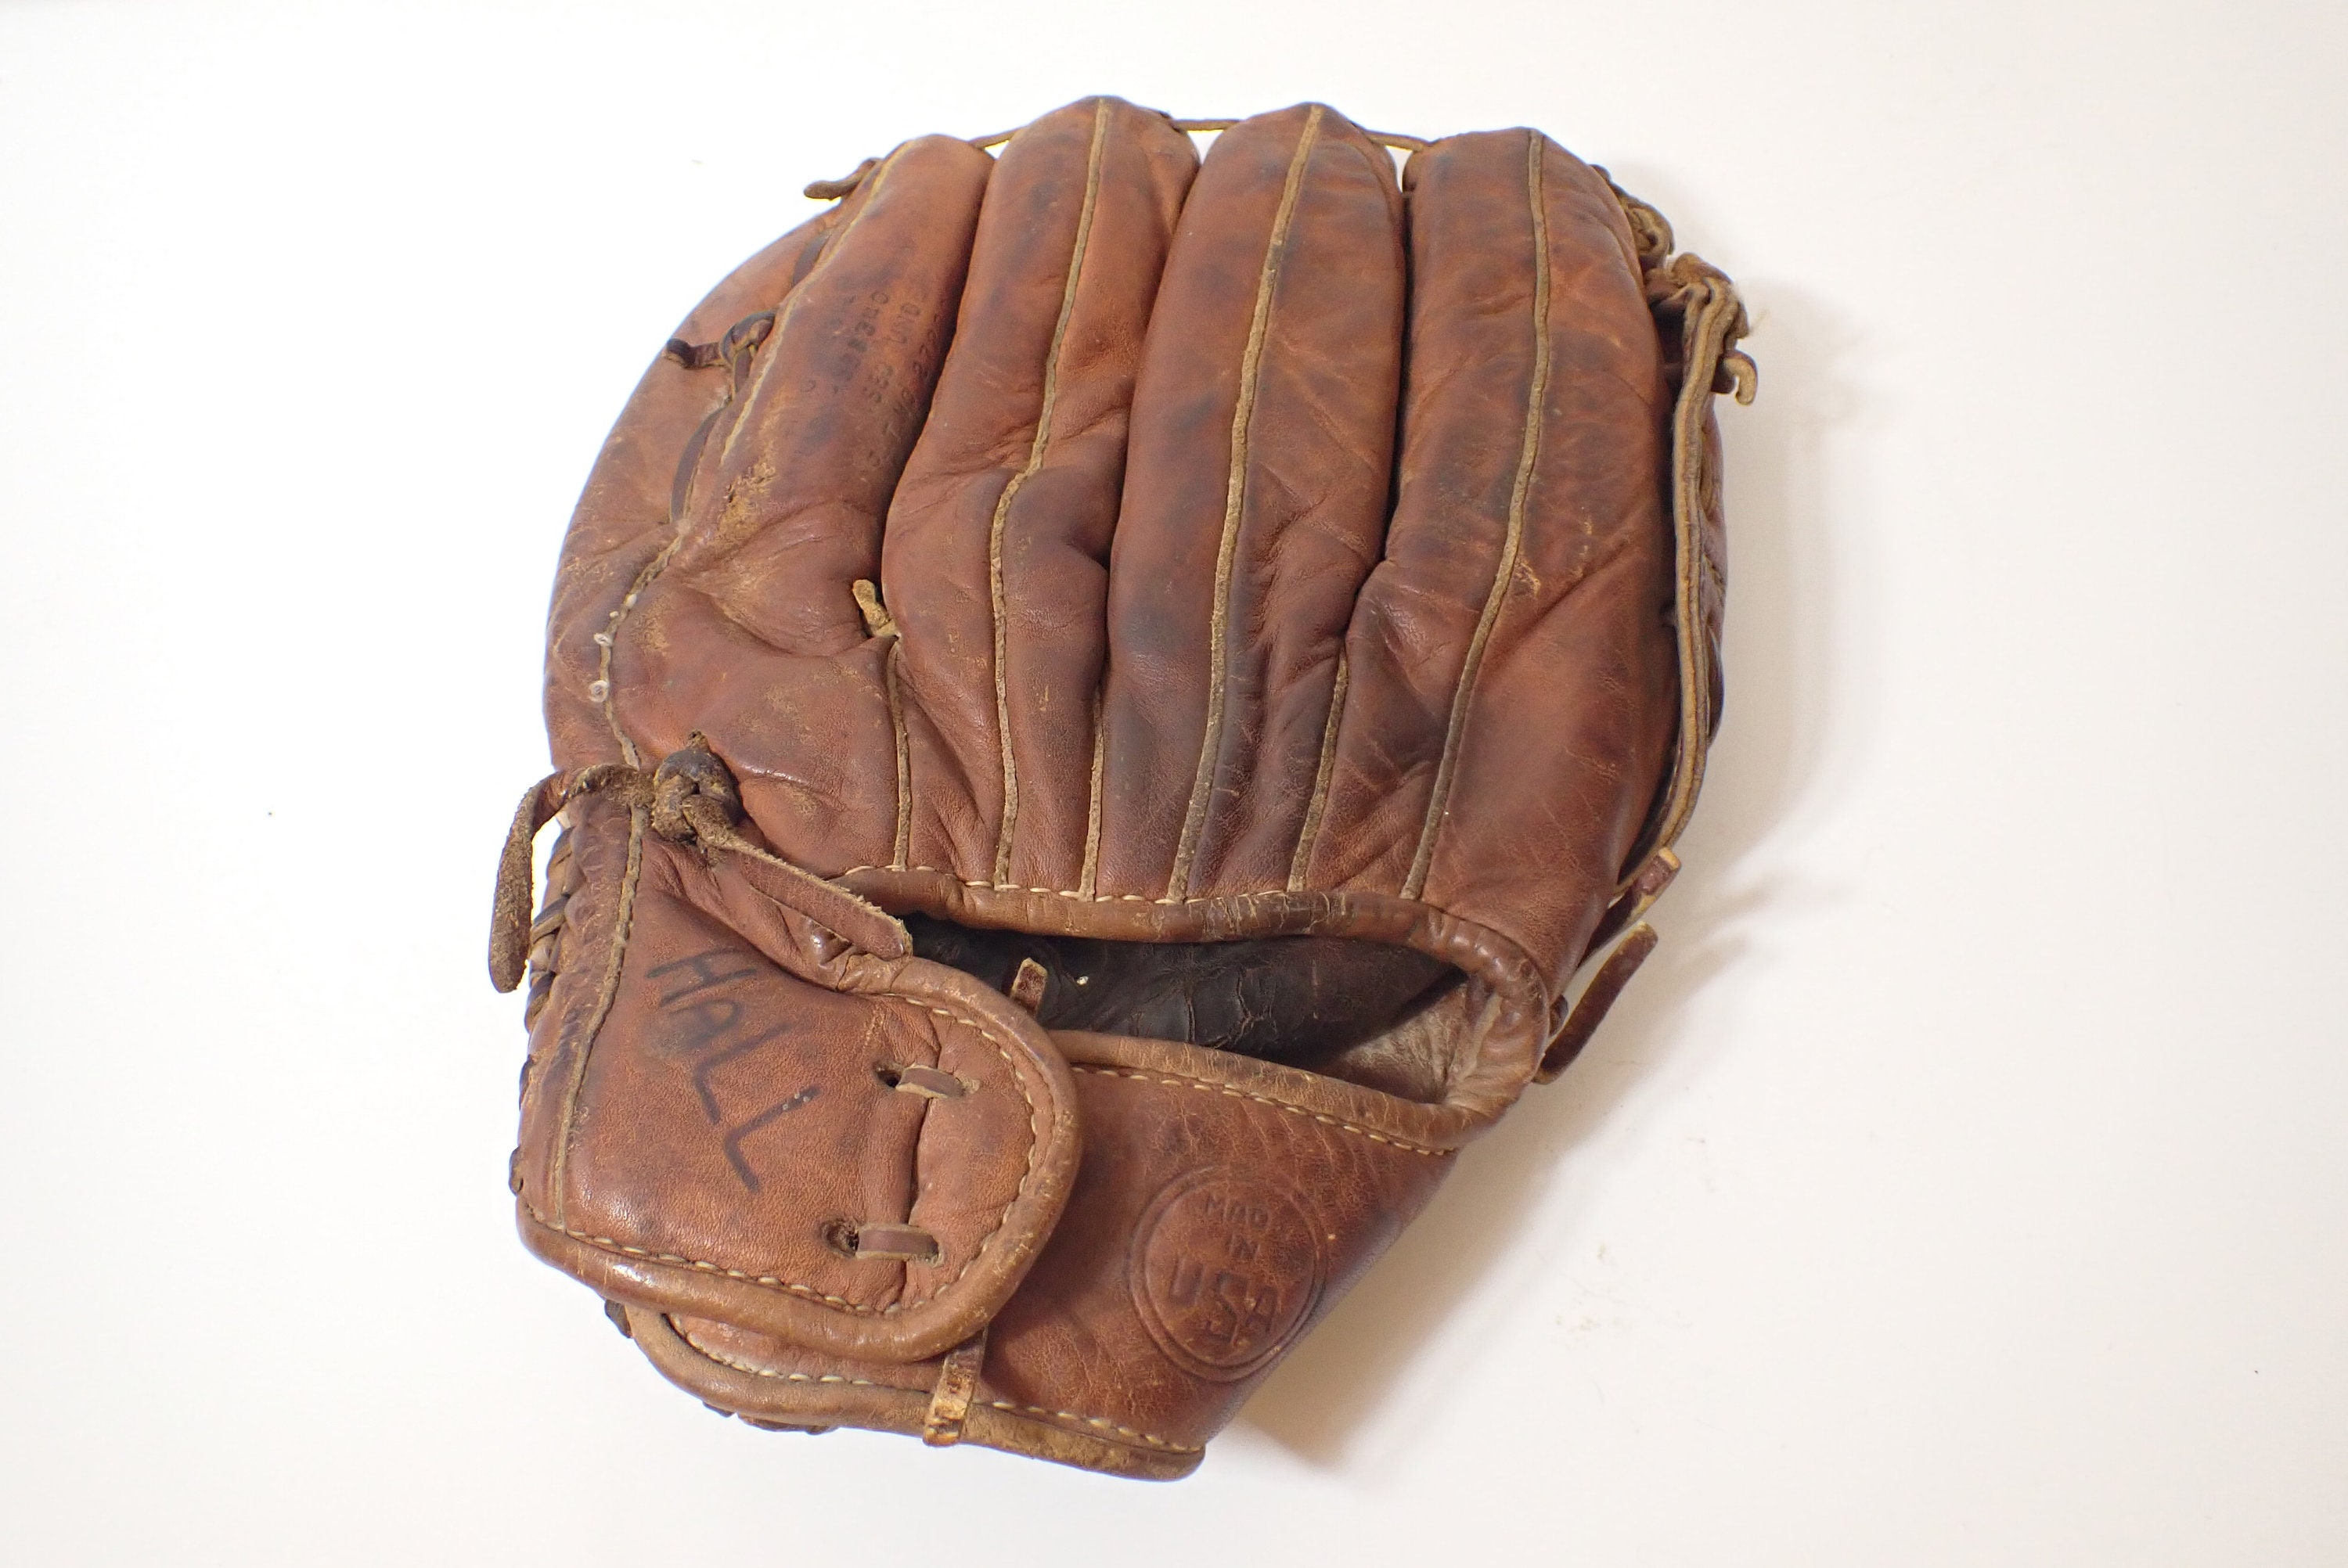 Vintage Wilson Jim Catfish Hunter 10” Baseball Glove